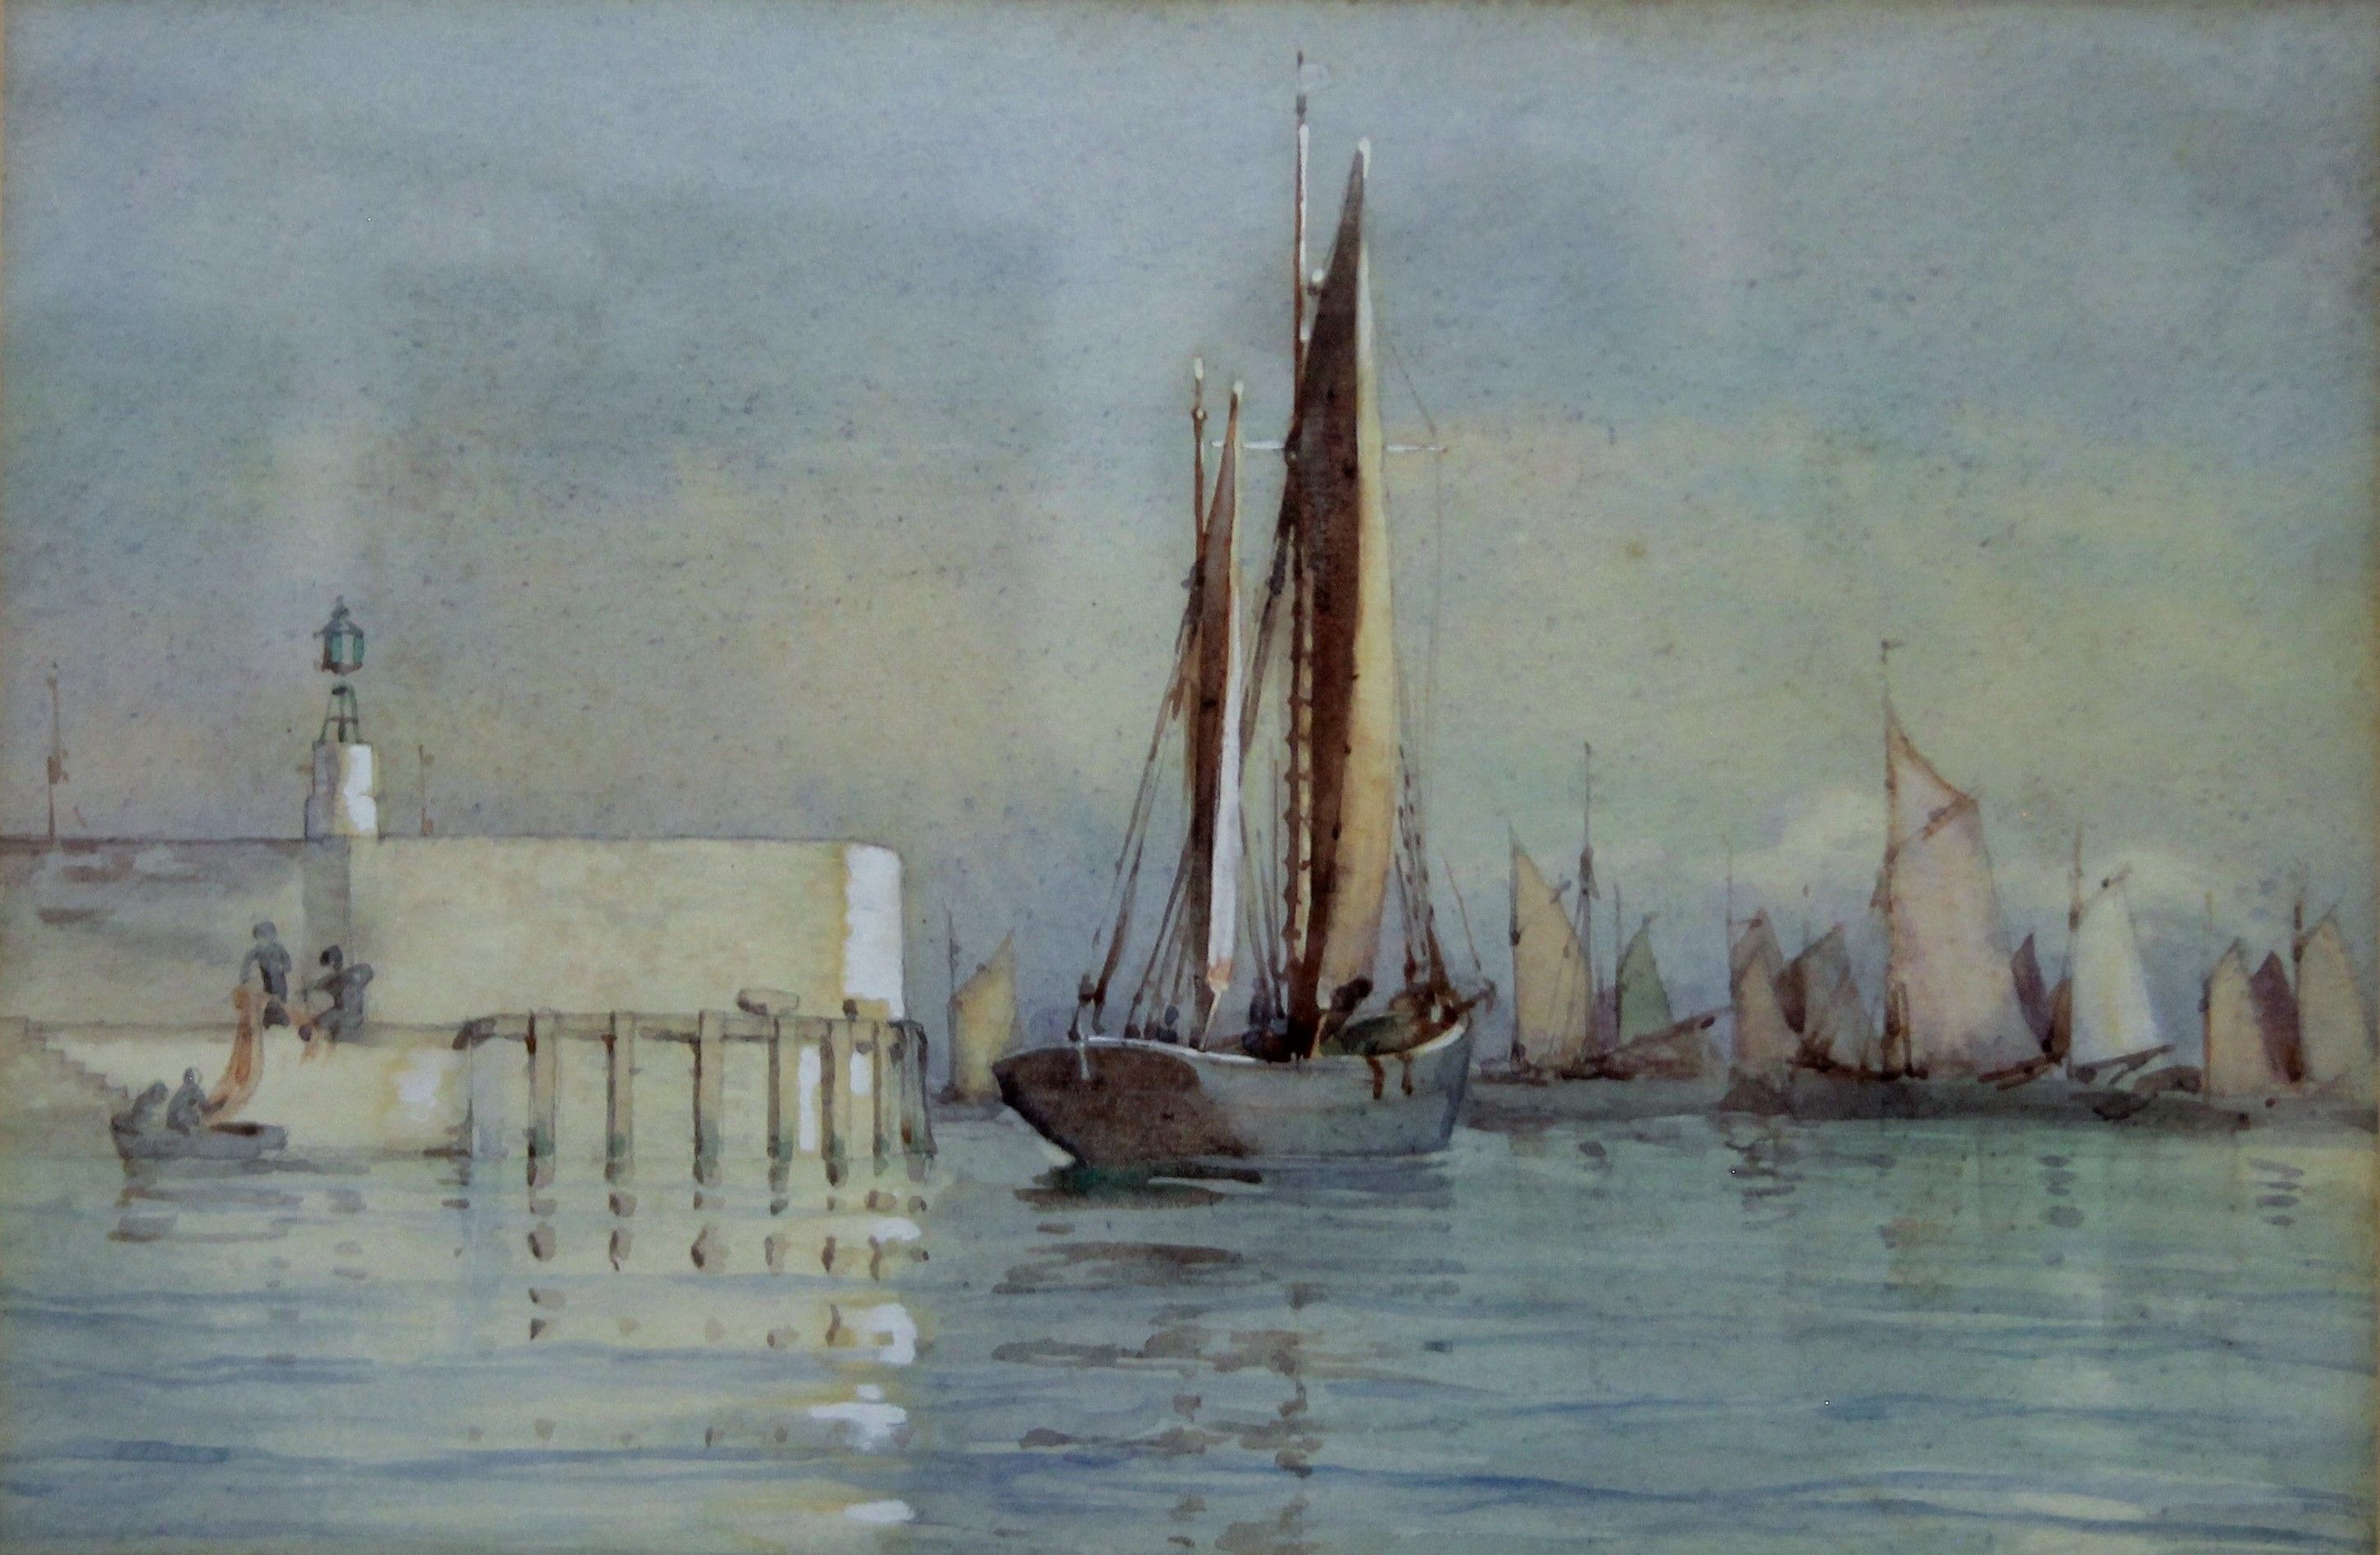 J E PLATT, Boats at a Harbour, watercolour, framed and glazed. 33 x 22 cm.